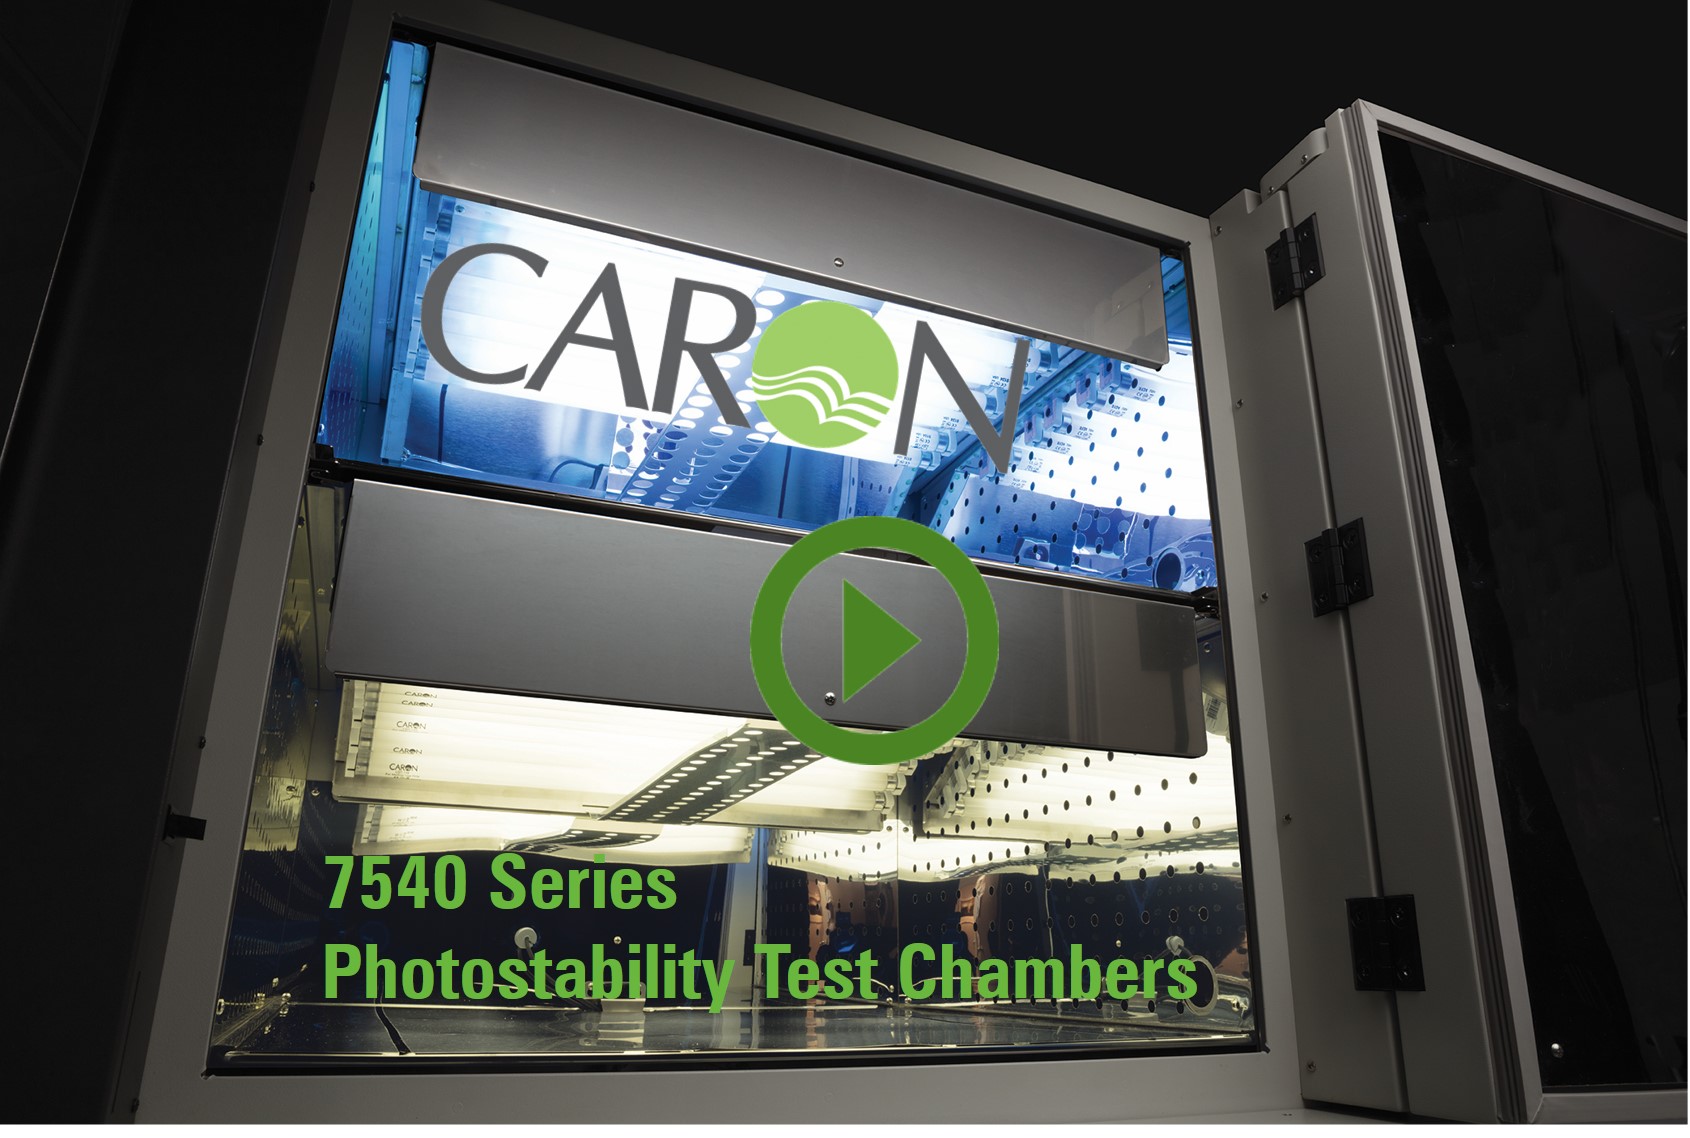 PhotostabVideoThumbnail-1 Caron -  Photostability